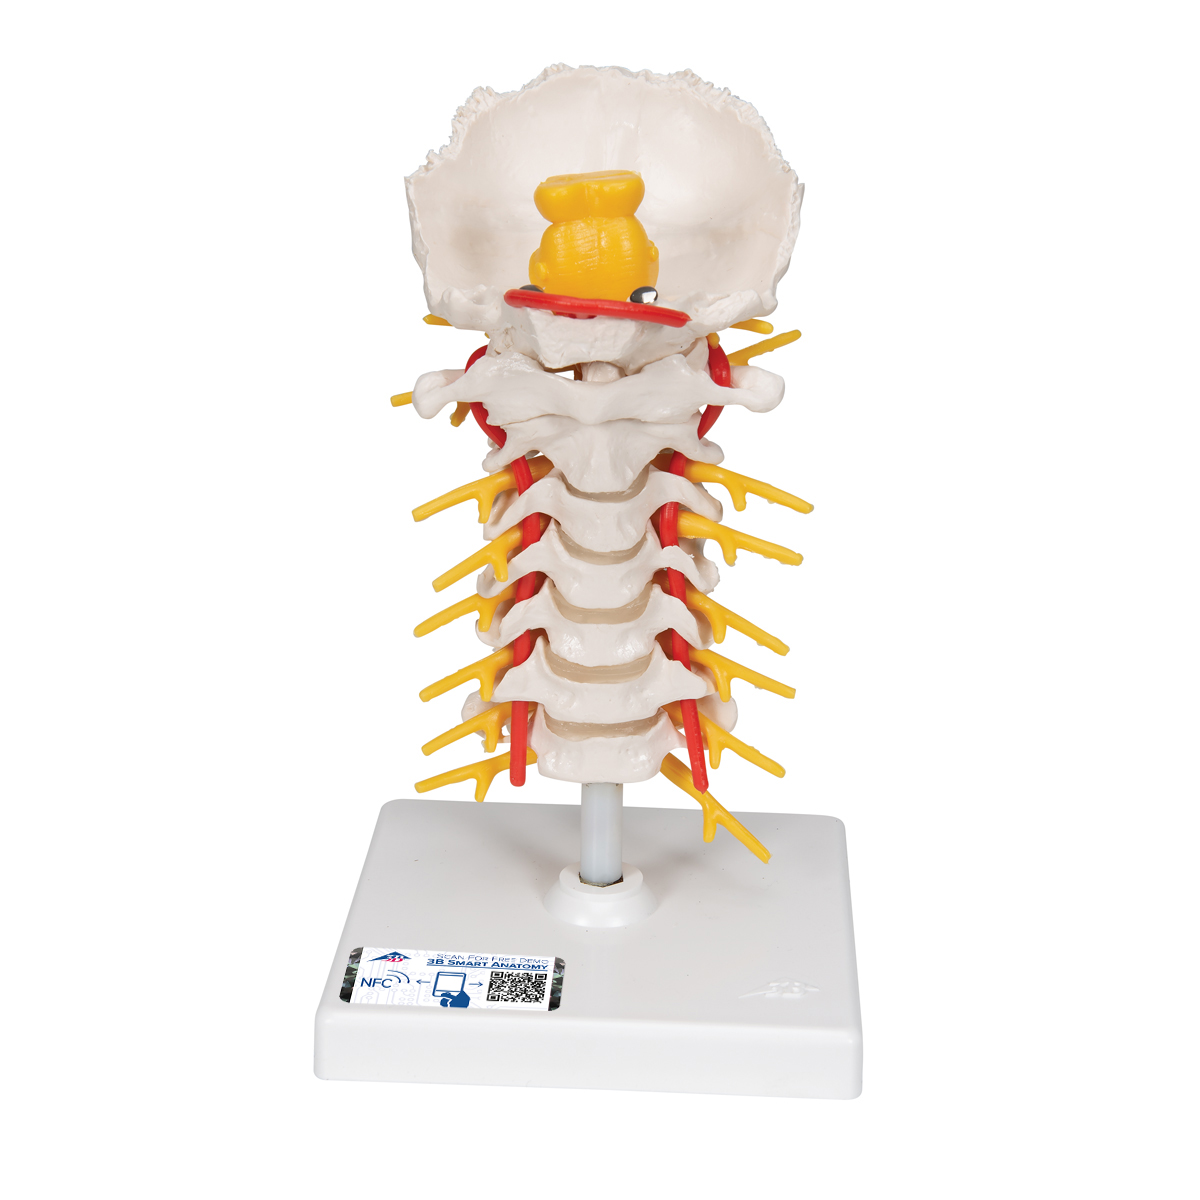 Cervical vertebrae occipital bone with spinal cord model ...